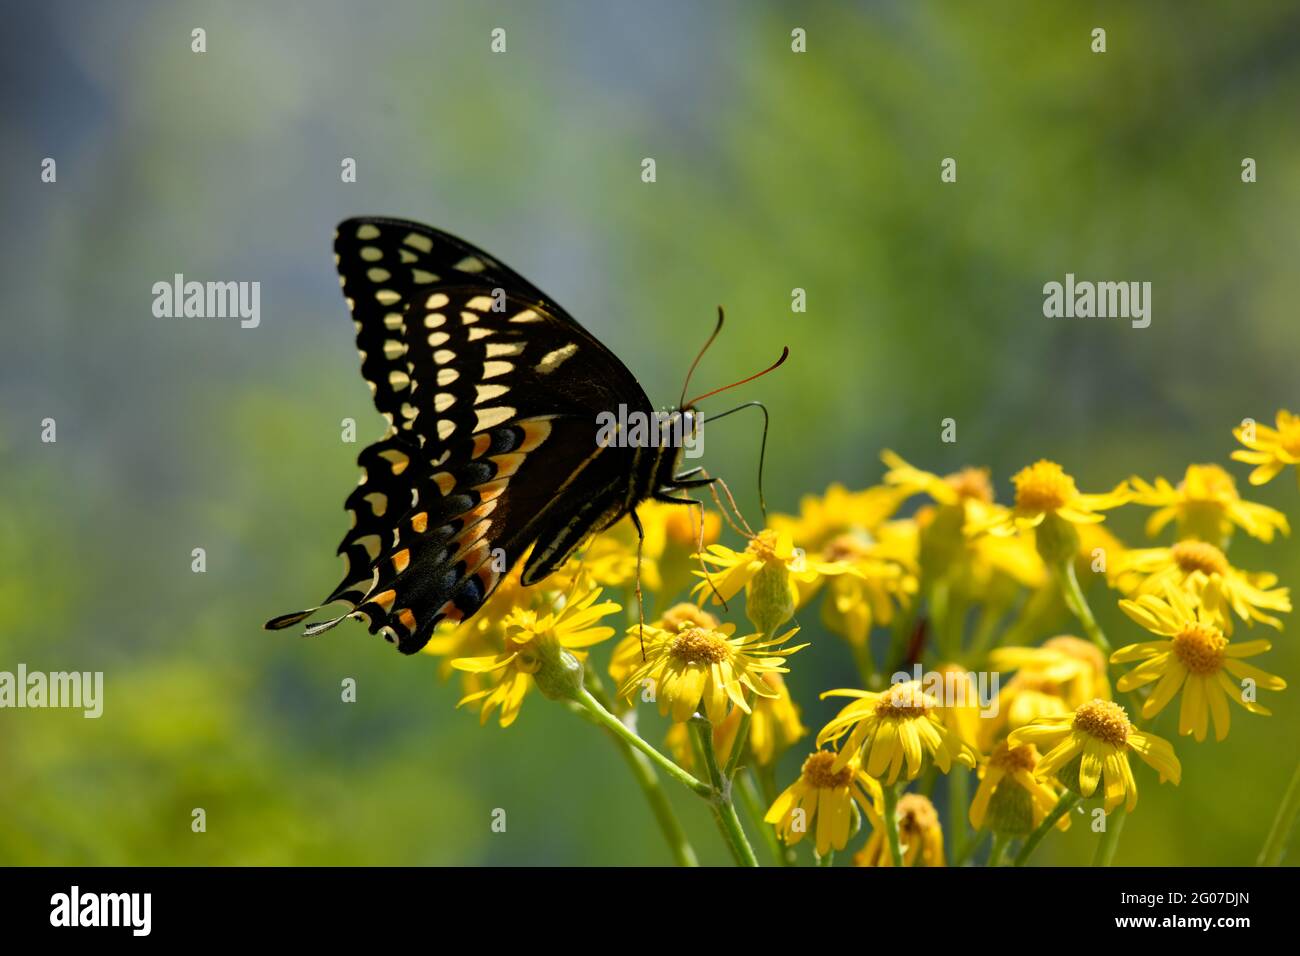 Black Swallowtail Butterfly Feeding on a Flower Stock Photo